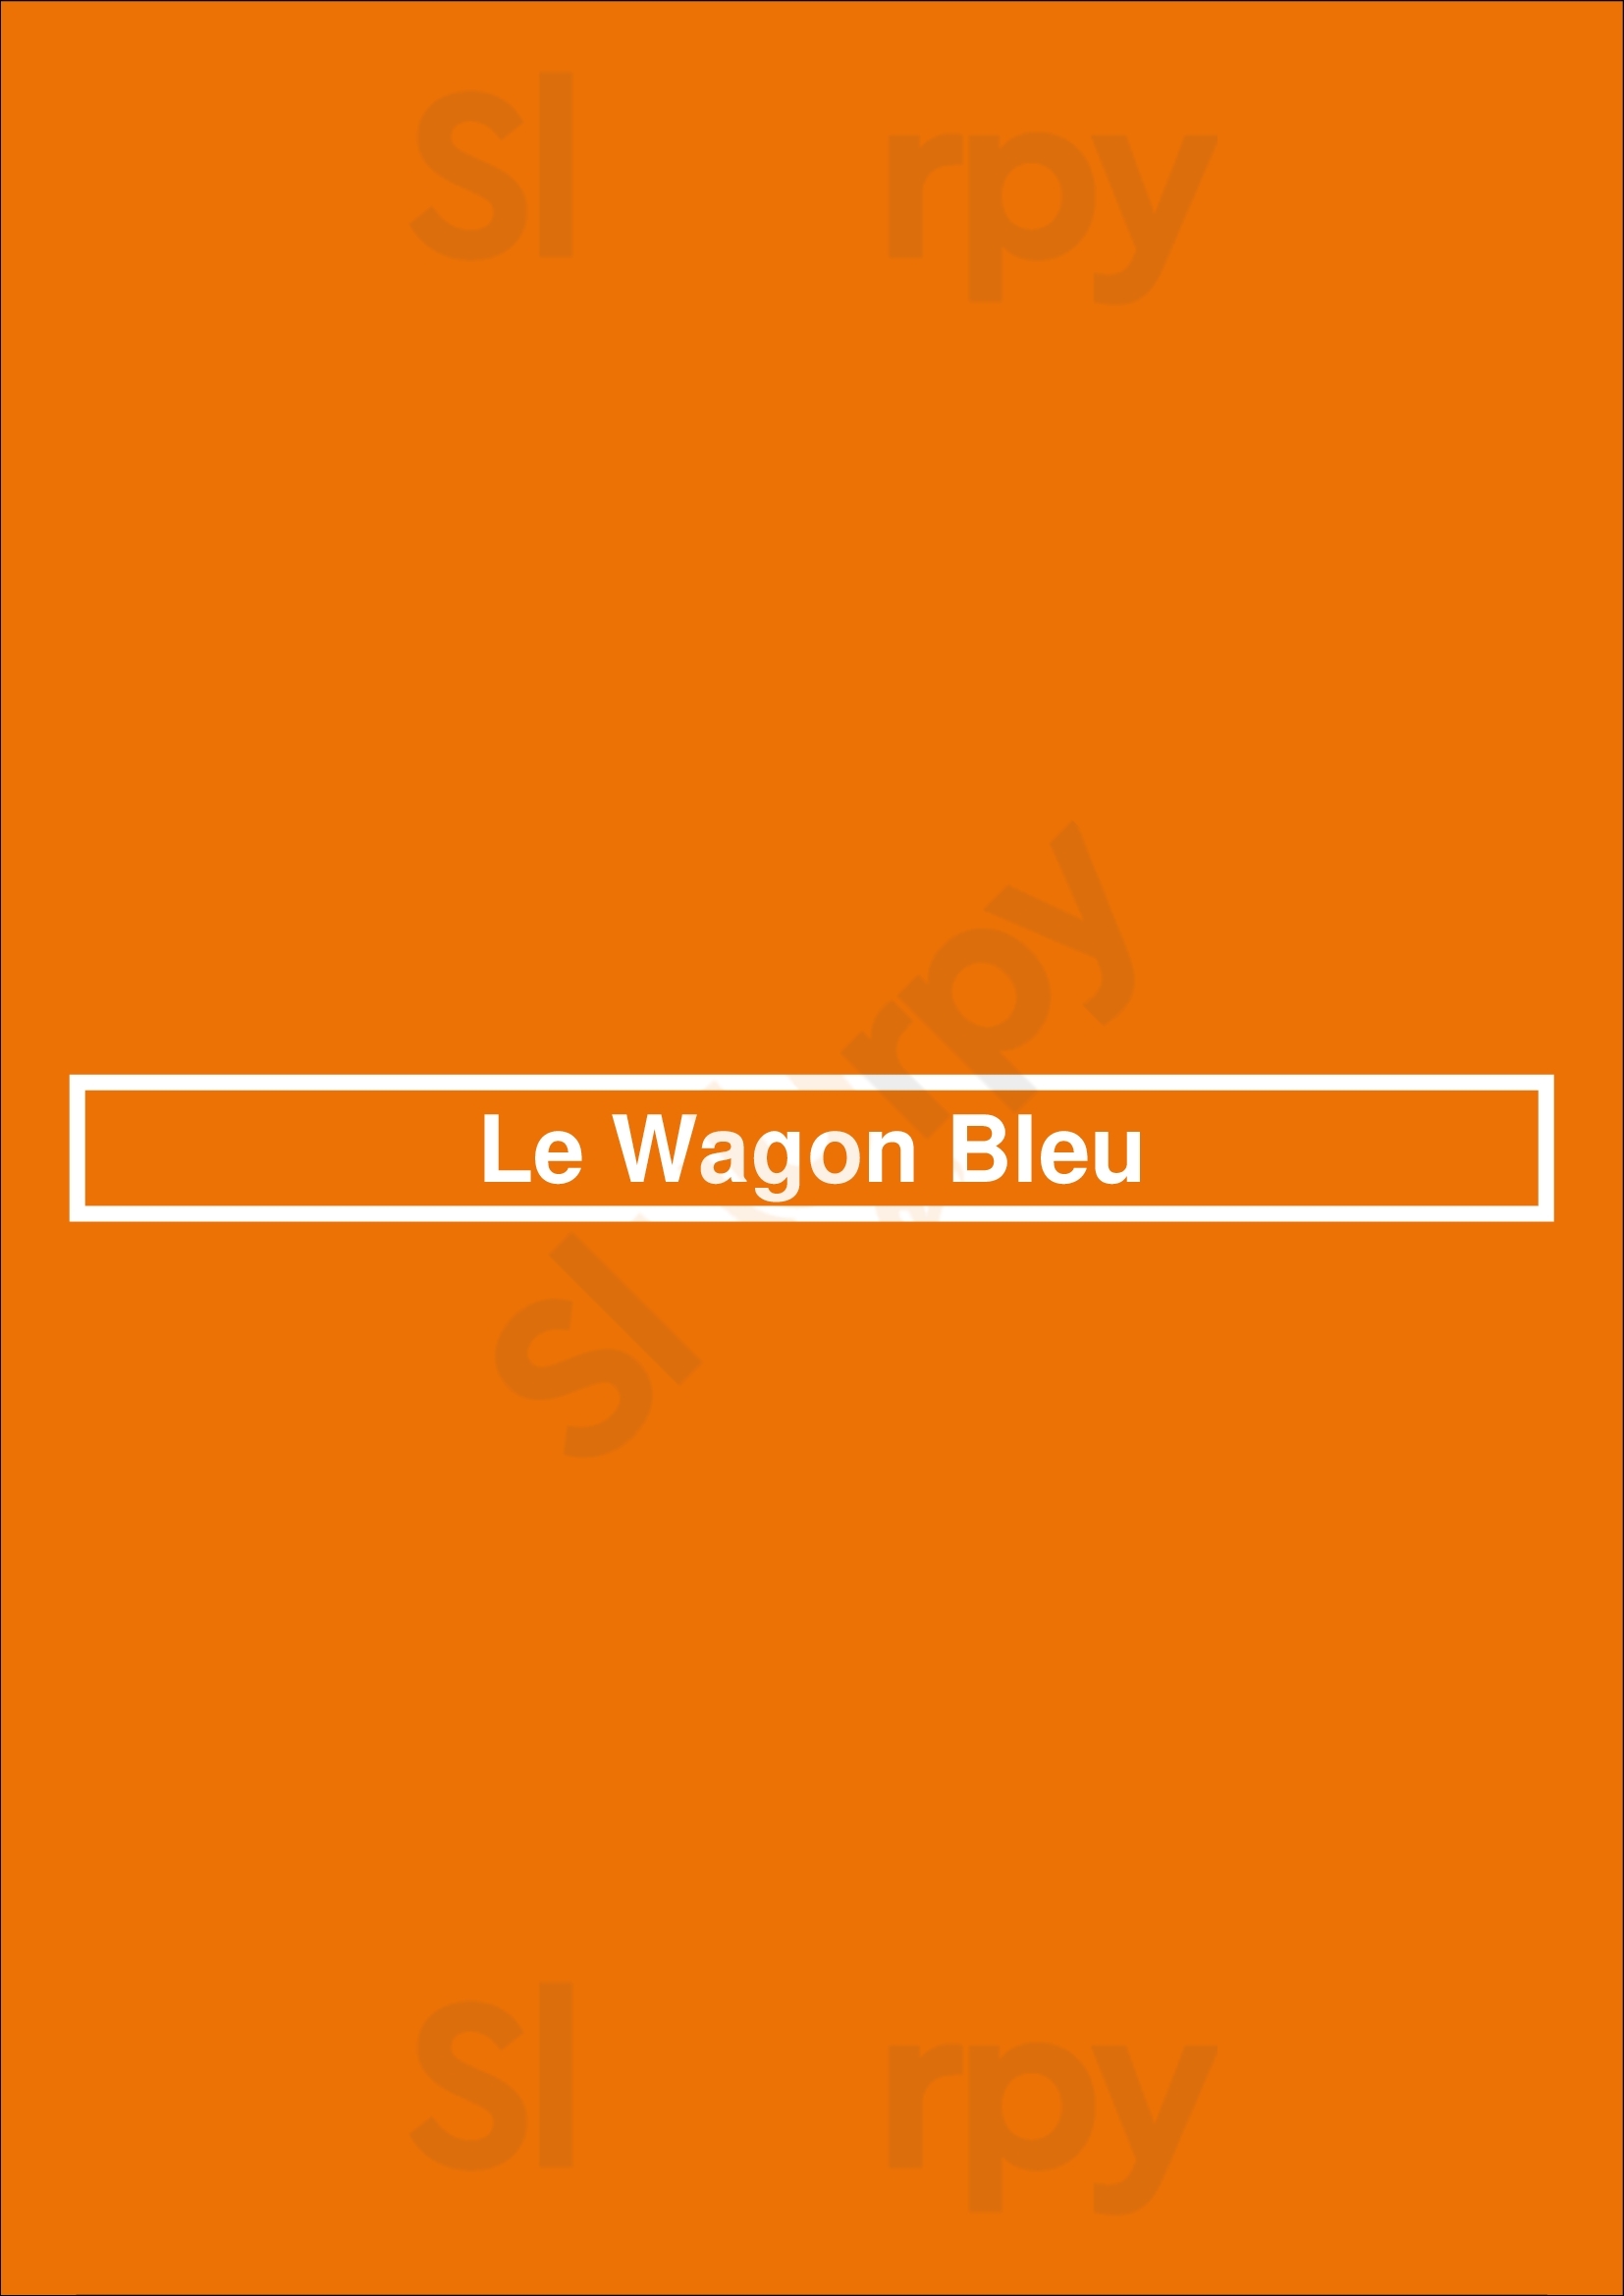 Le Wagon Bleu Paris Menu - 1